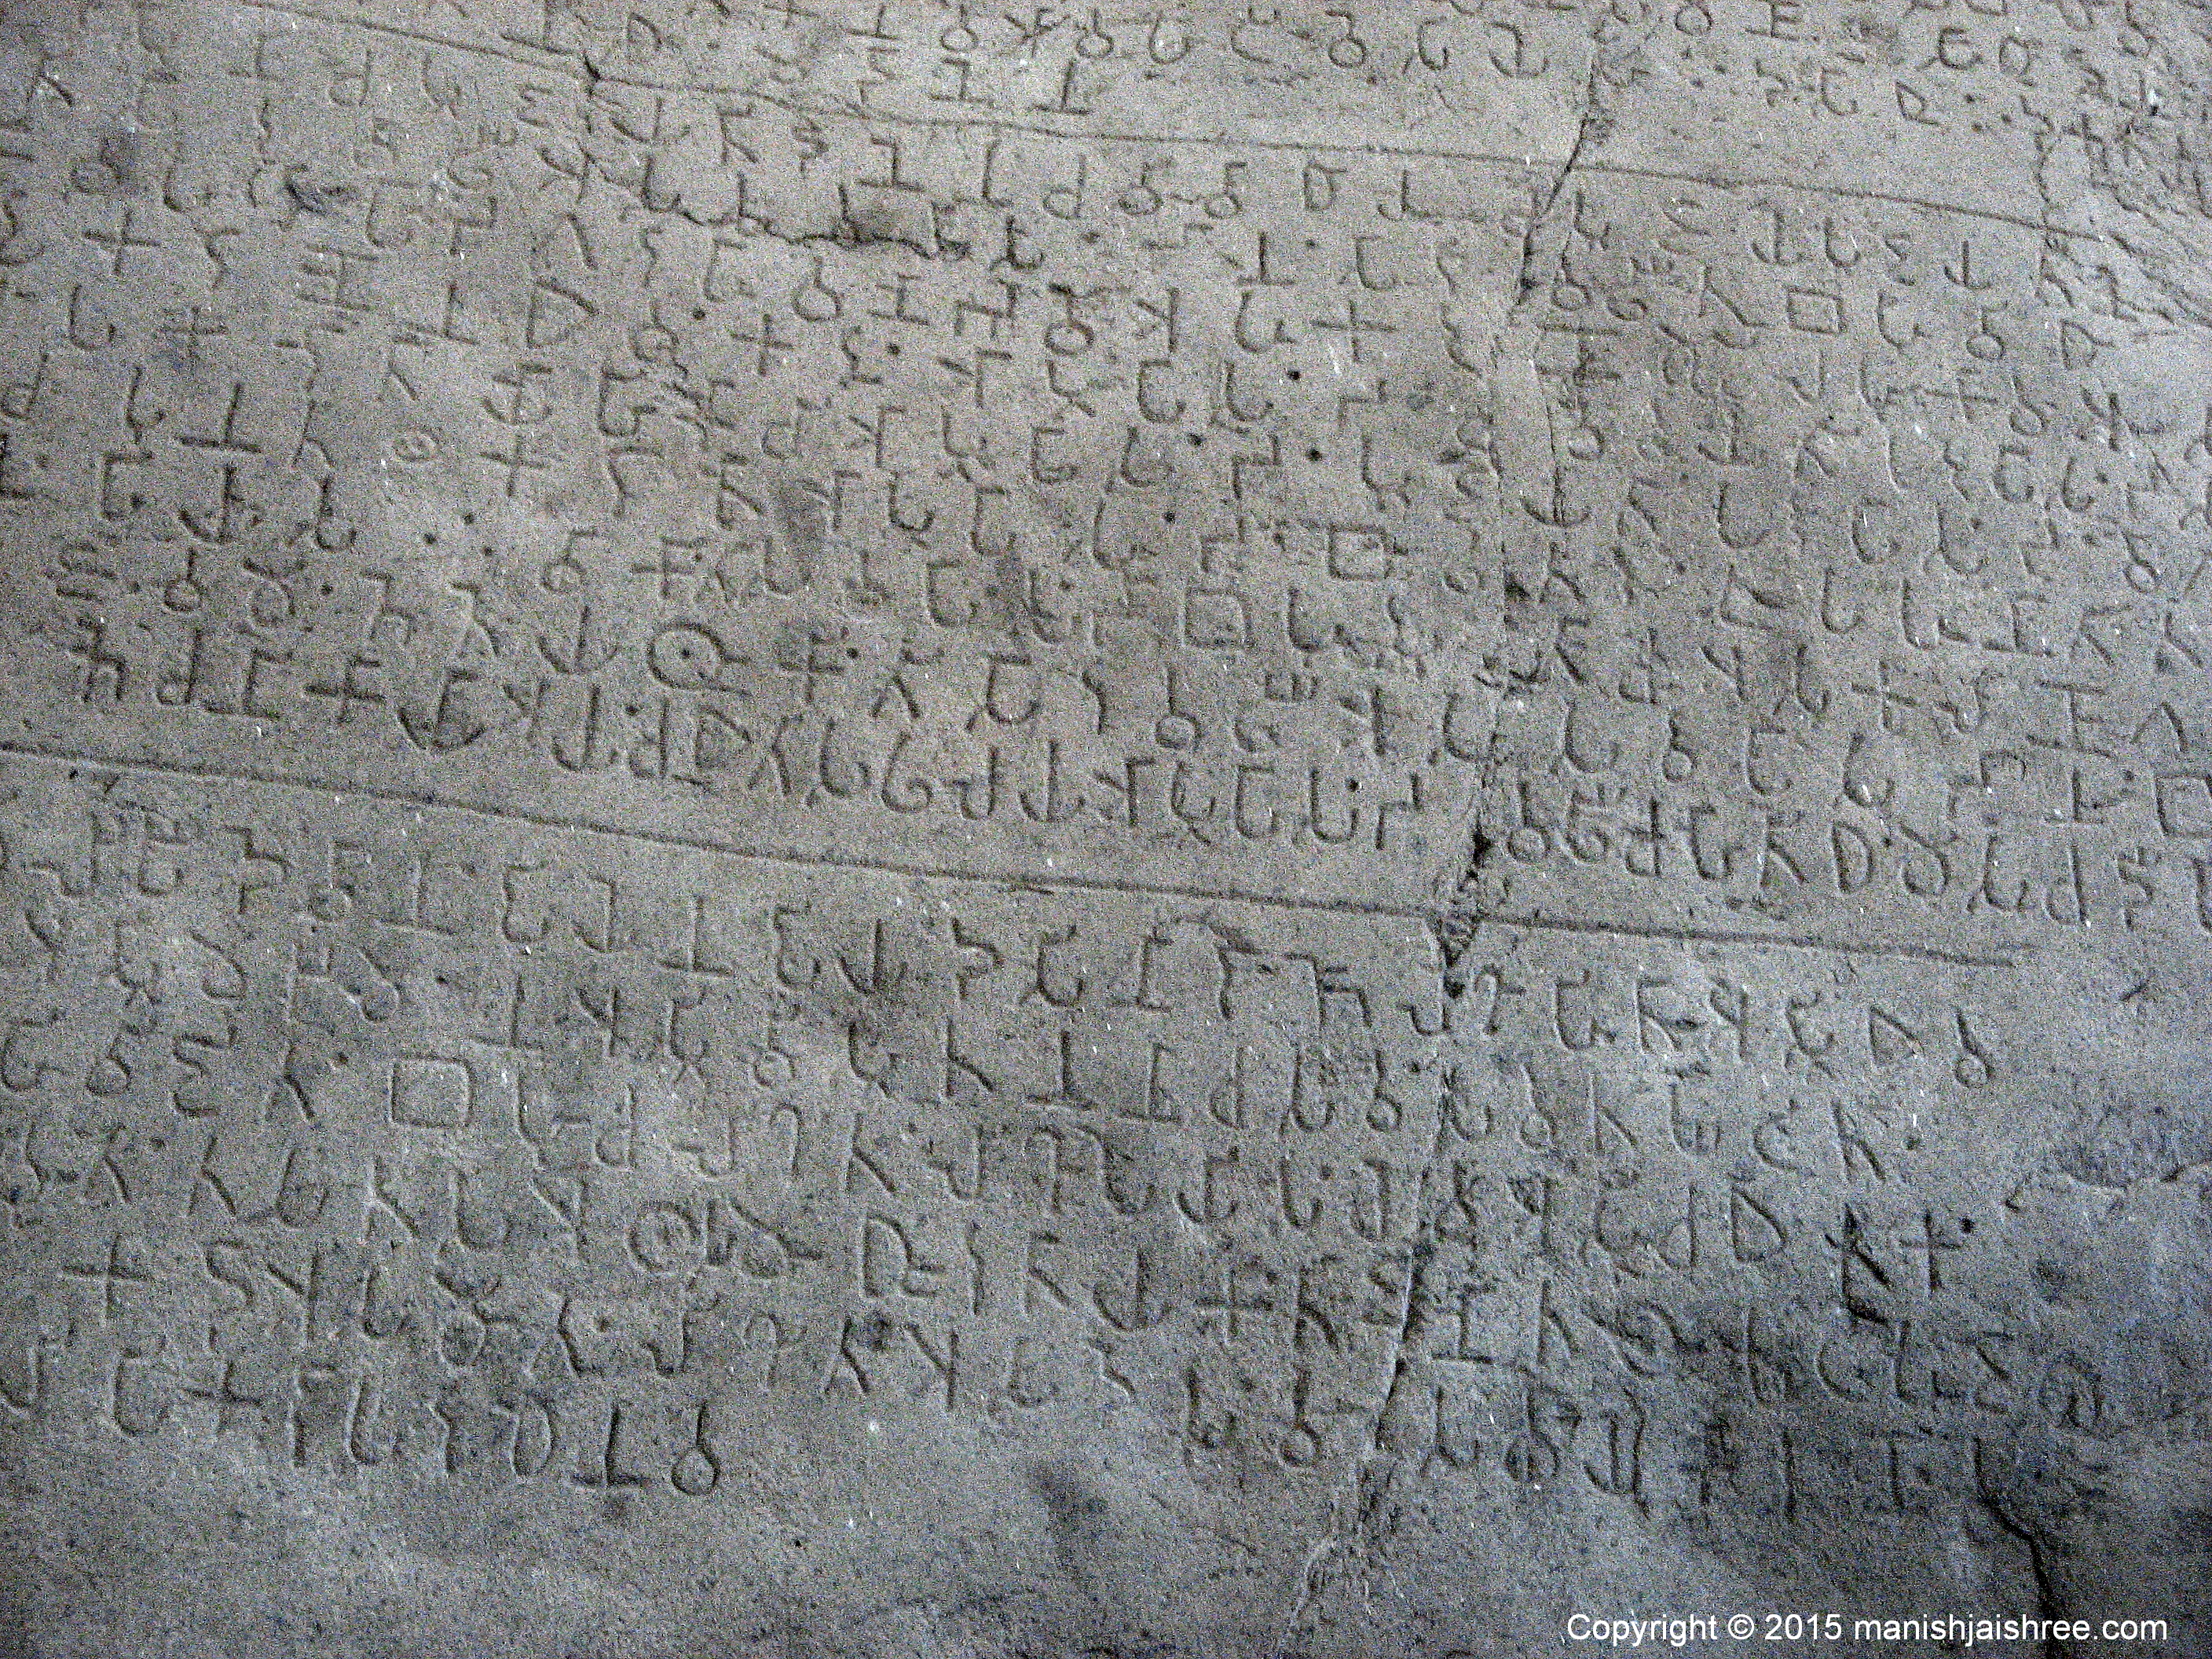 Rock edict written in Pali (Ashokan Brahmi), Junagarh